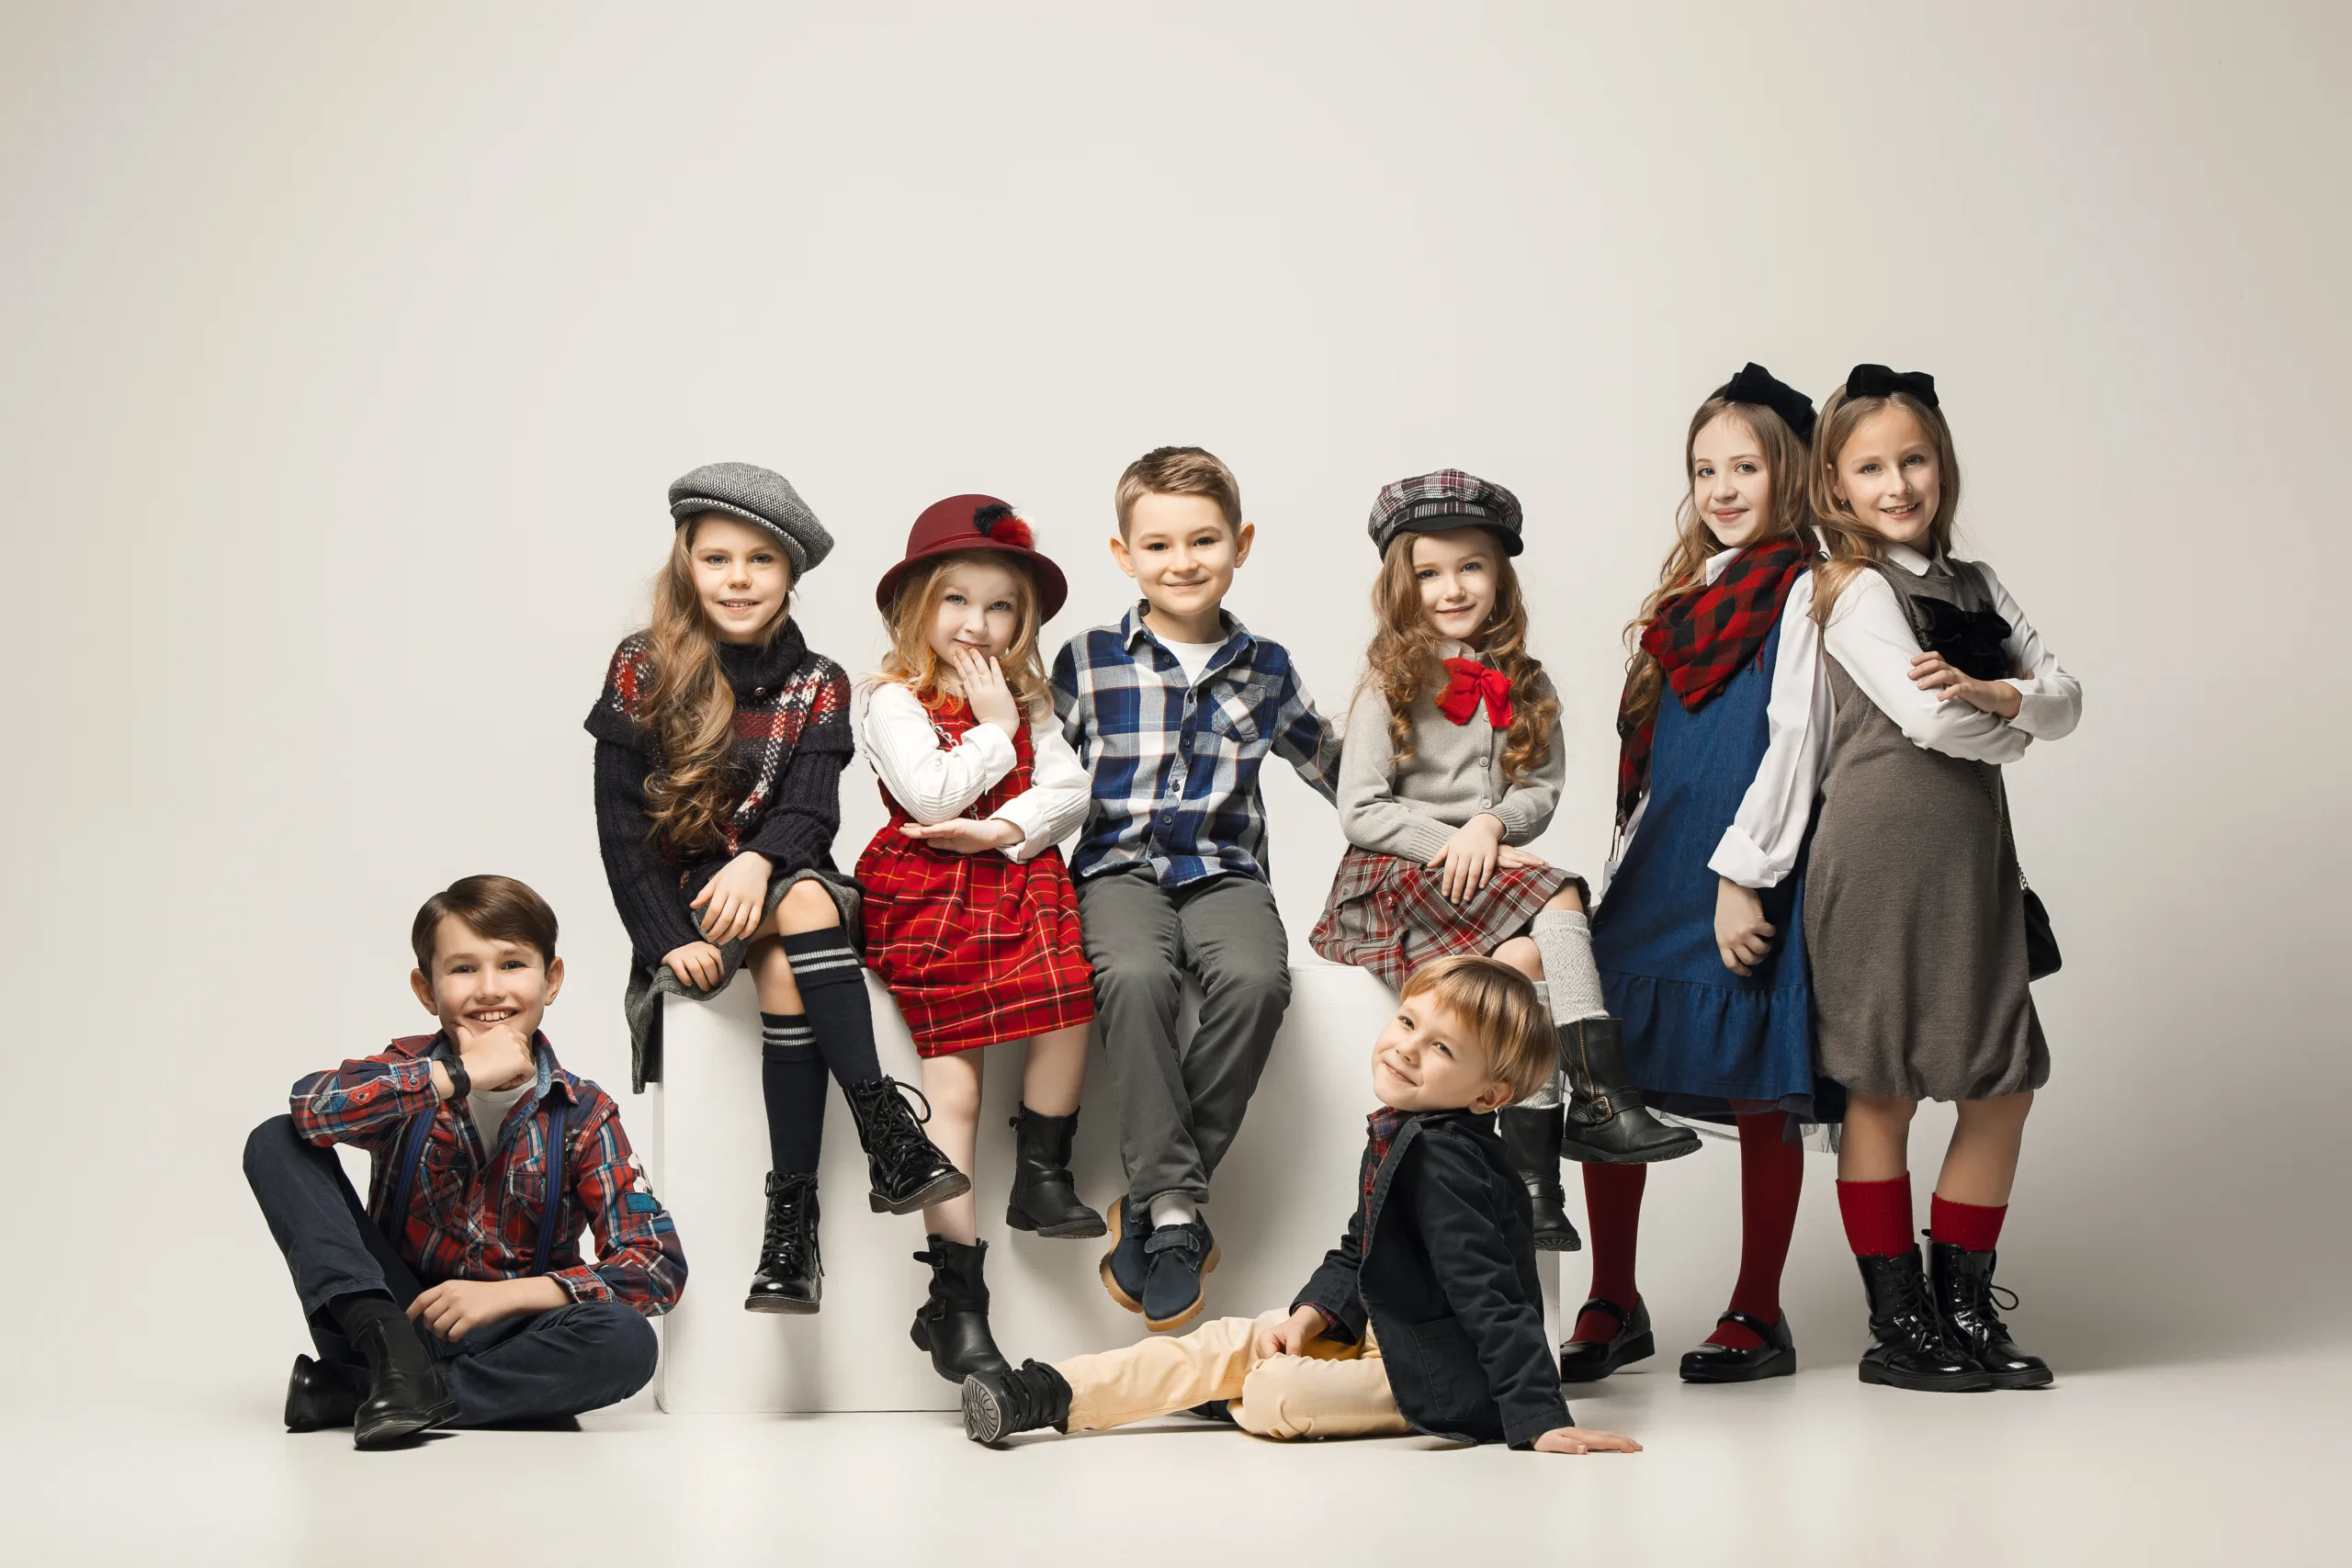 Kids Fashion Group